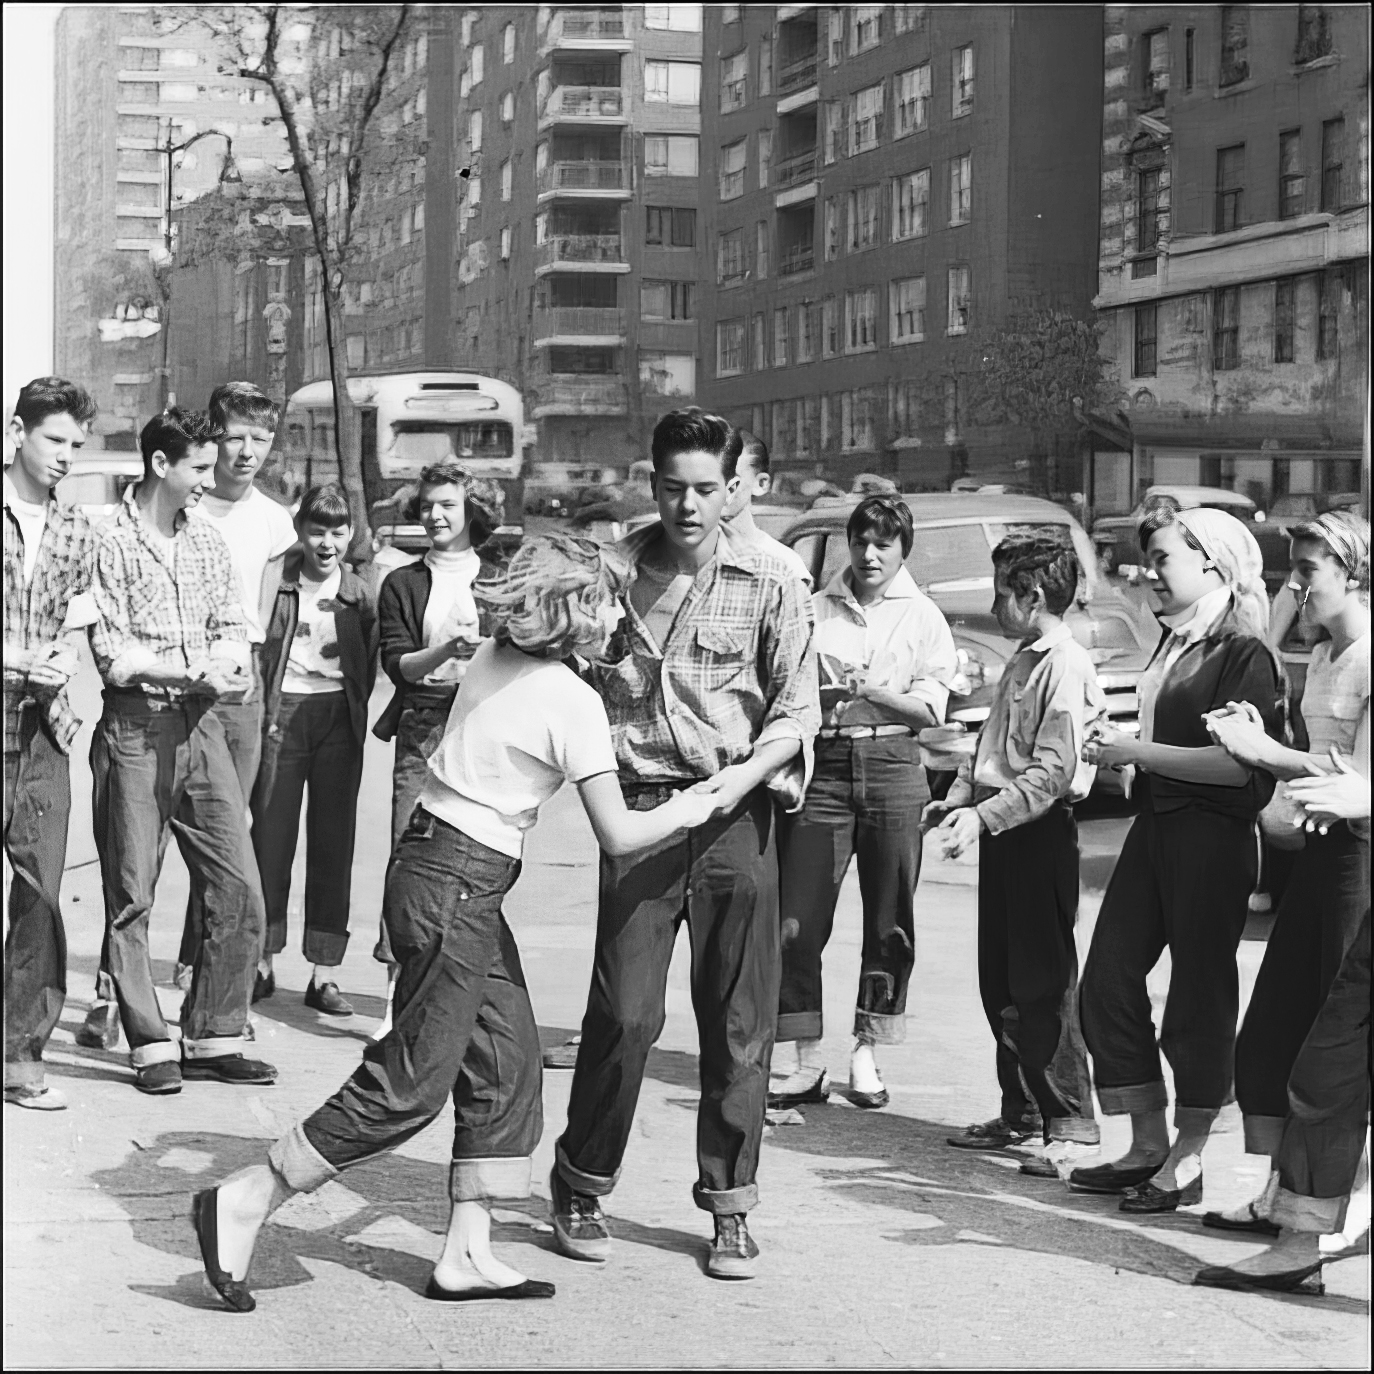 TEENS ON THE STREET:1950s